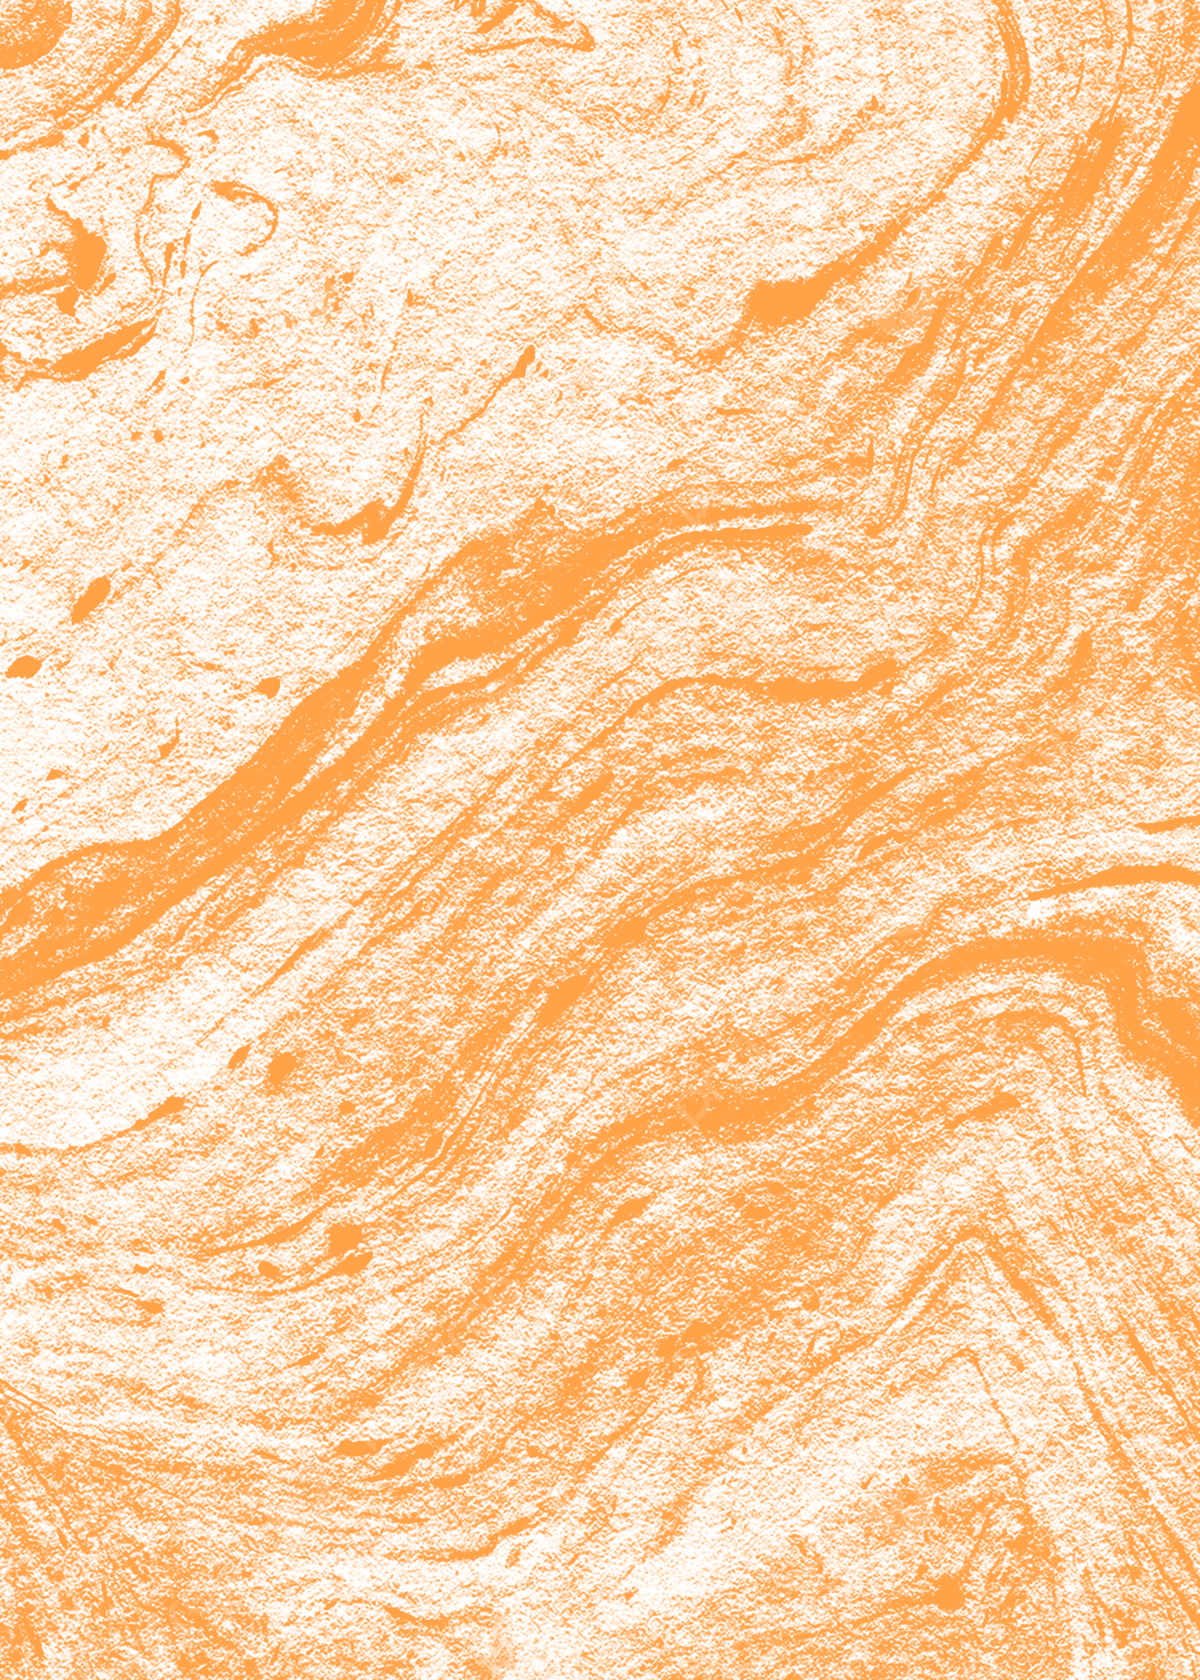 Light Orange Background Liquid Marble Wallpaper Image For Free Download